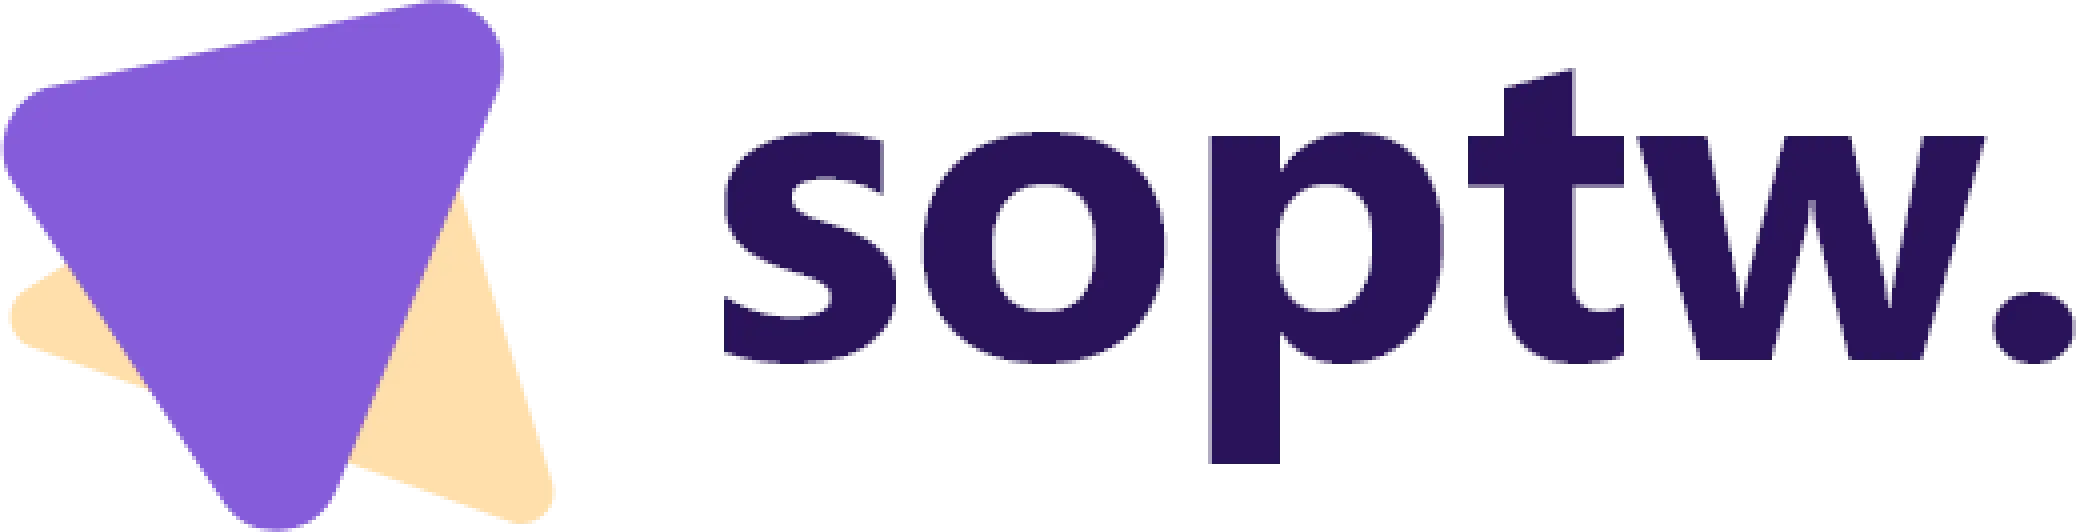 Soptw - Software Company Template Logo